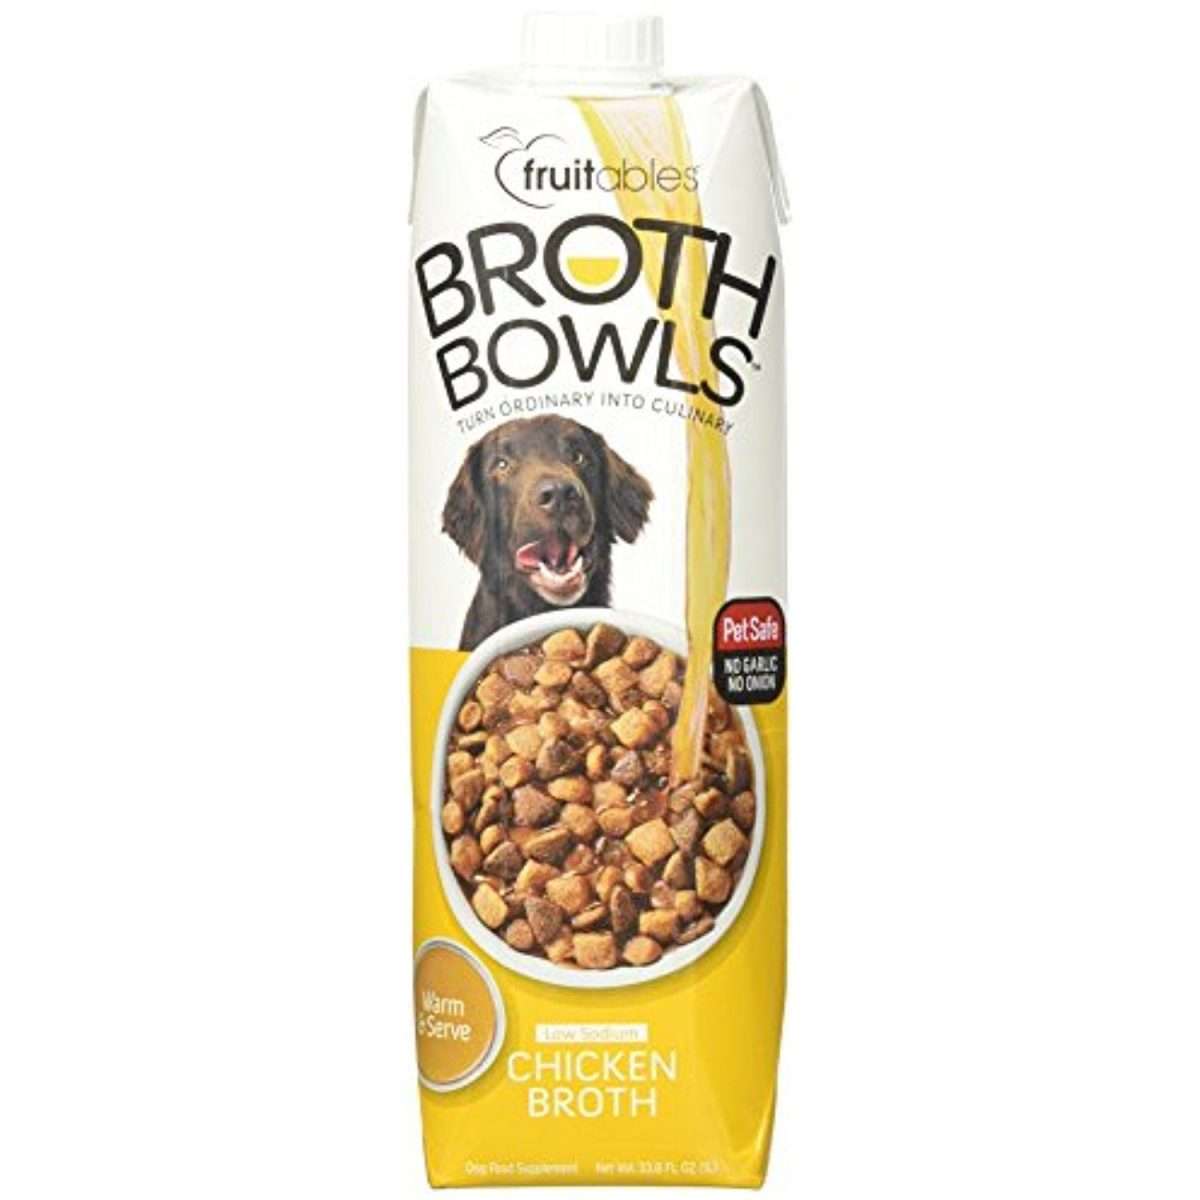 Fruitables Broth Bowls Pet Safe Natural Chicken Food Topper Low Calorie ...